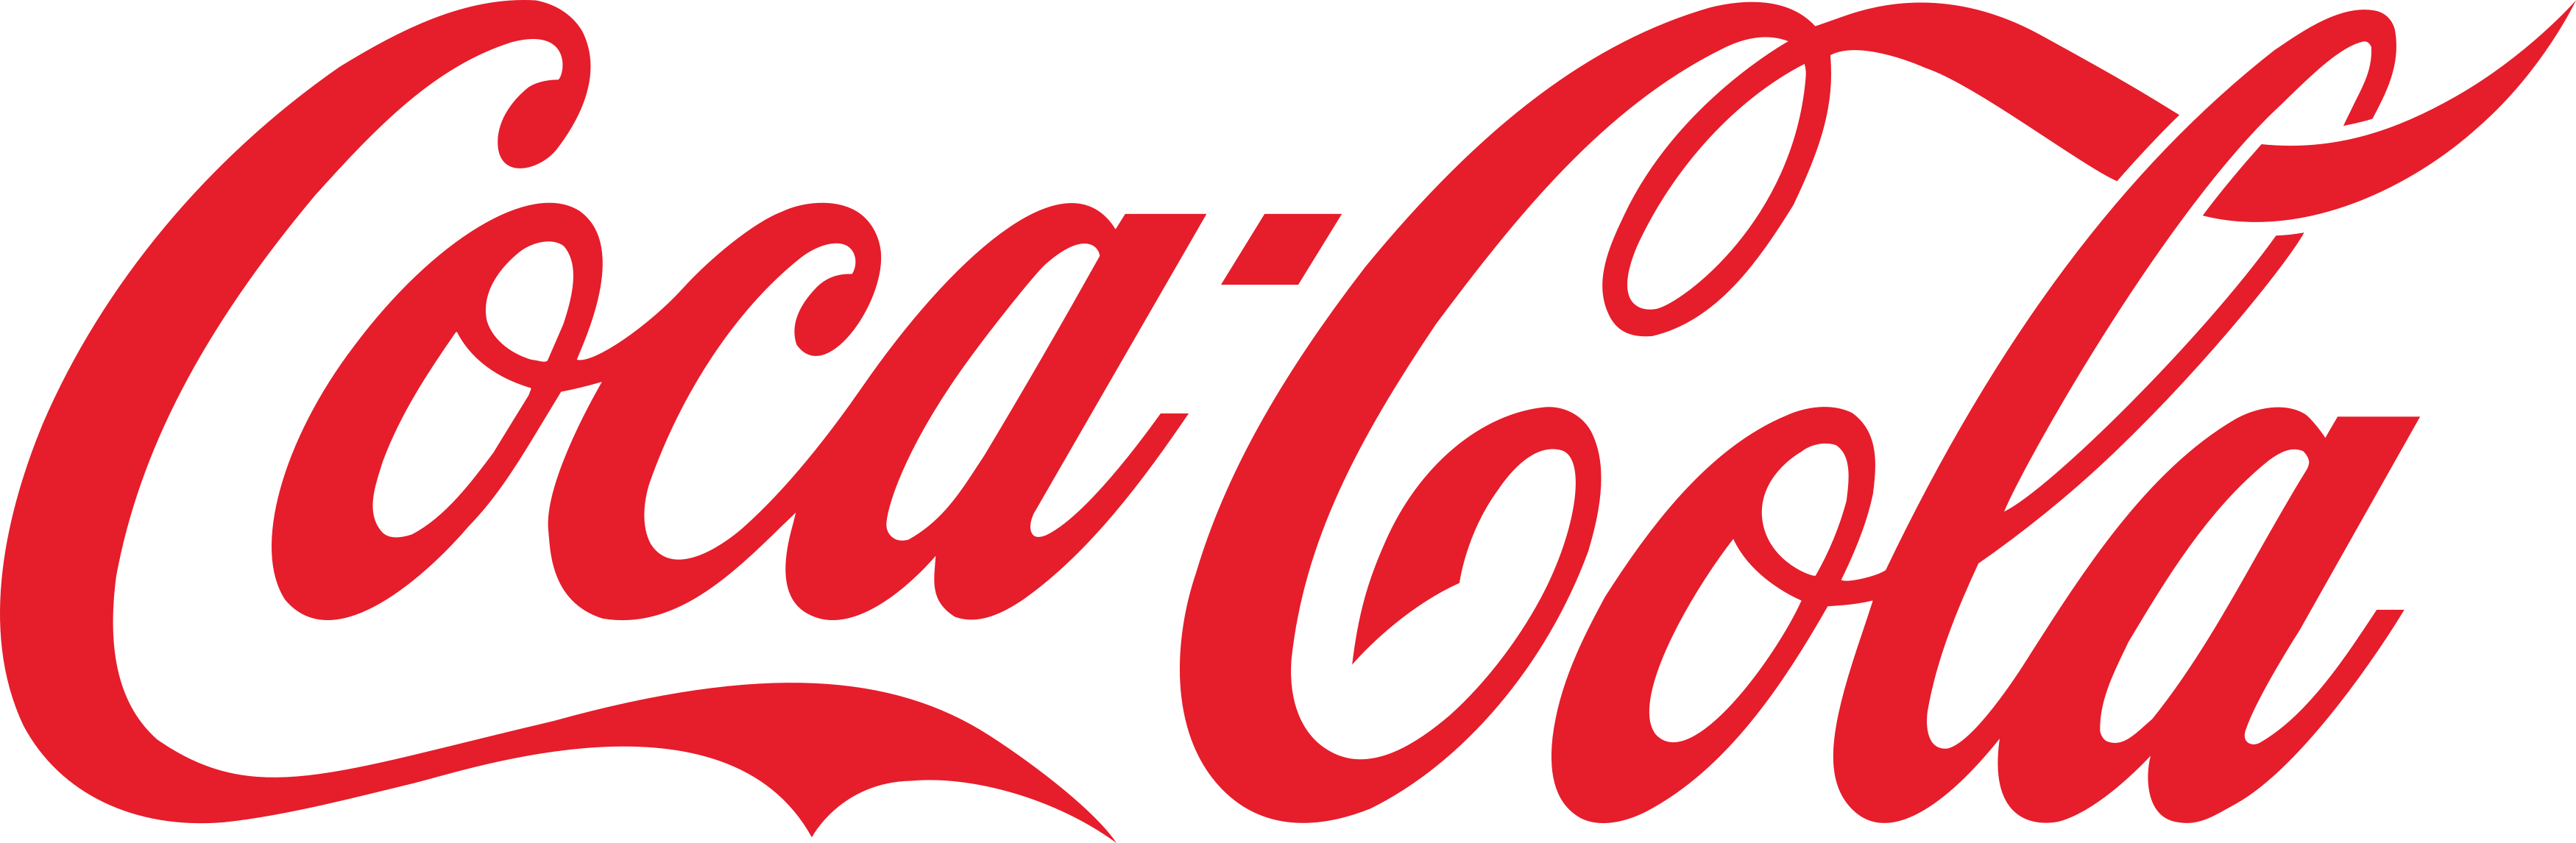 coca cola logo 1